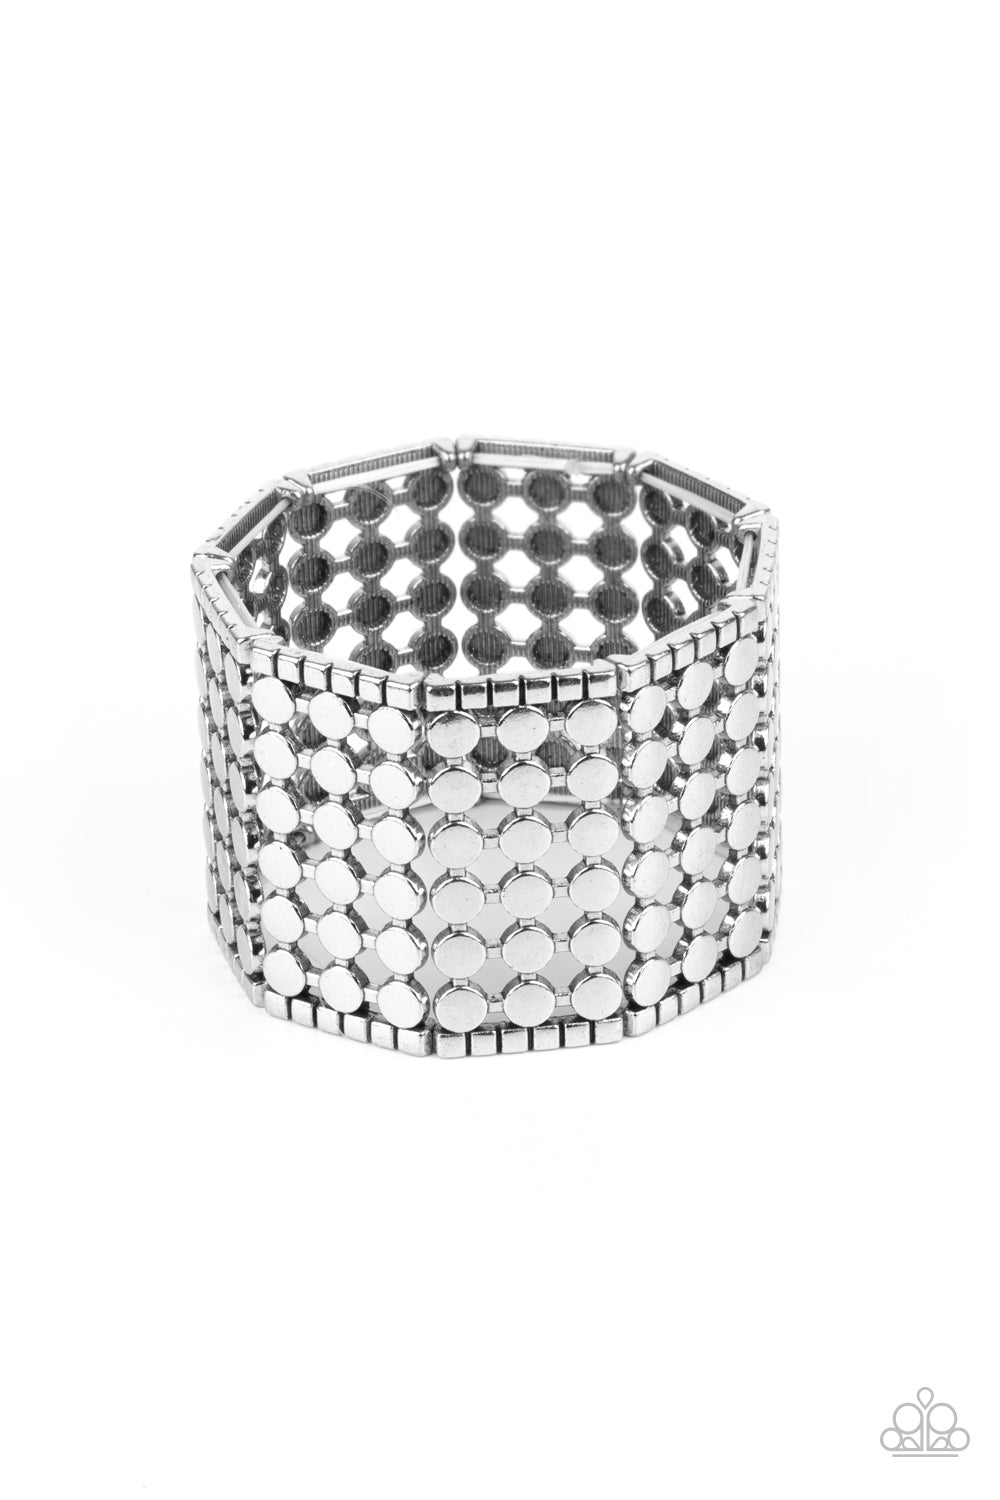 Cool and CONNECTED Silver
Bracelet - Daria's Blings N Things